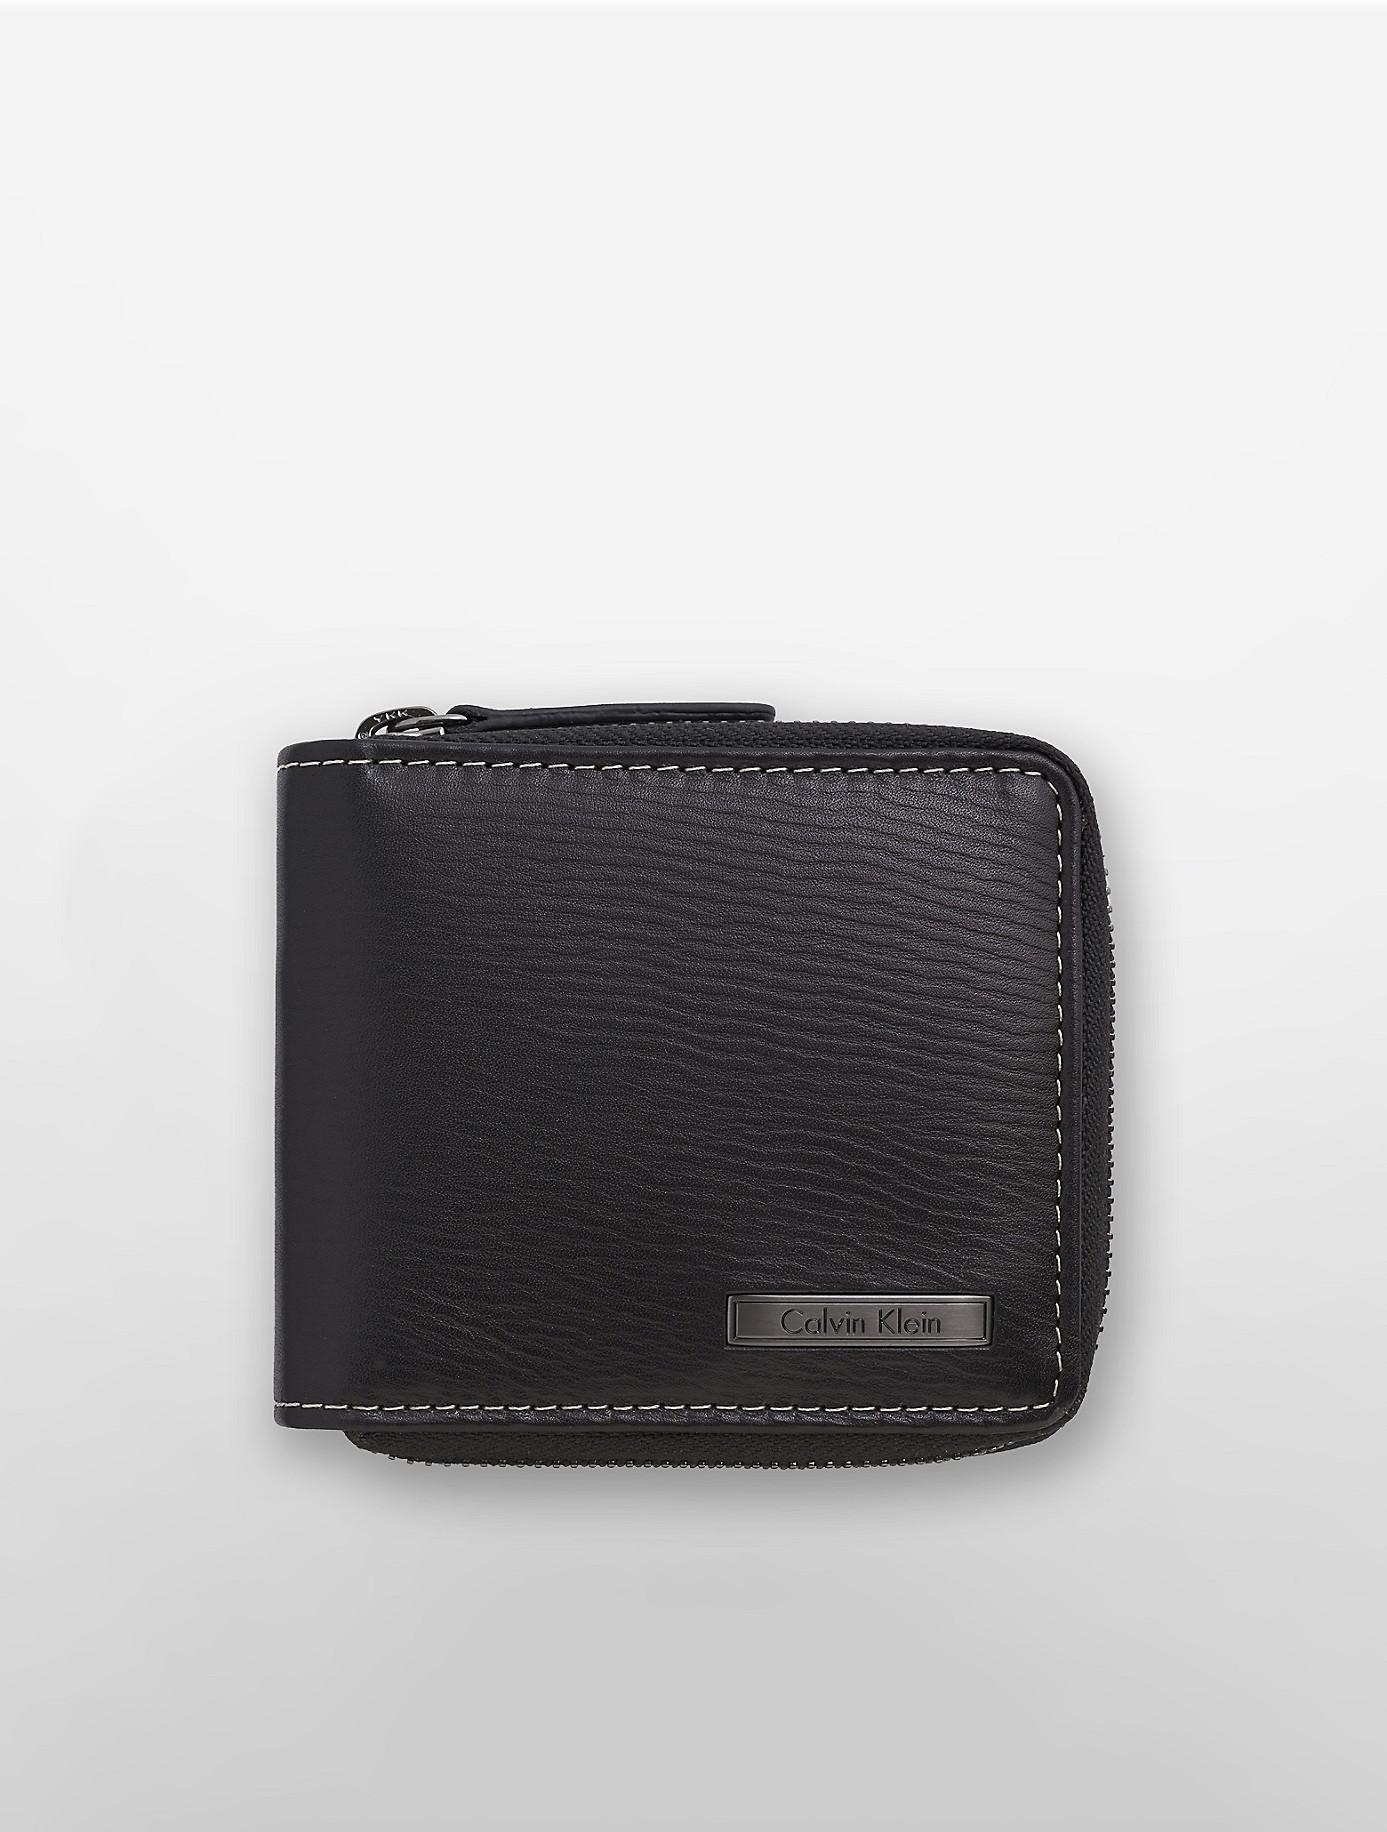 Calvin Klein Leather Textured Zip Wallet in Black for Men - Lyst